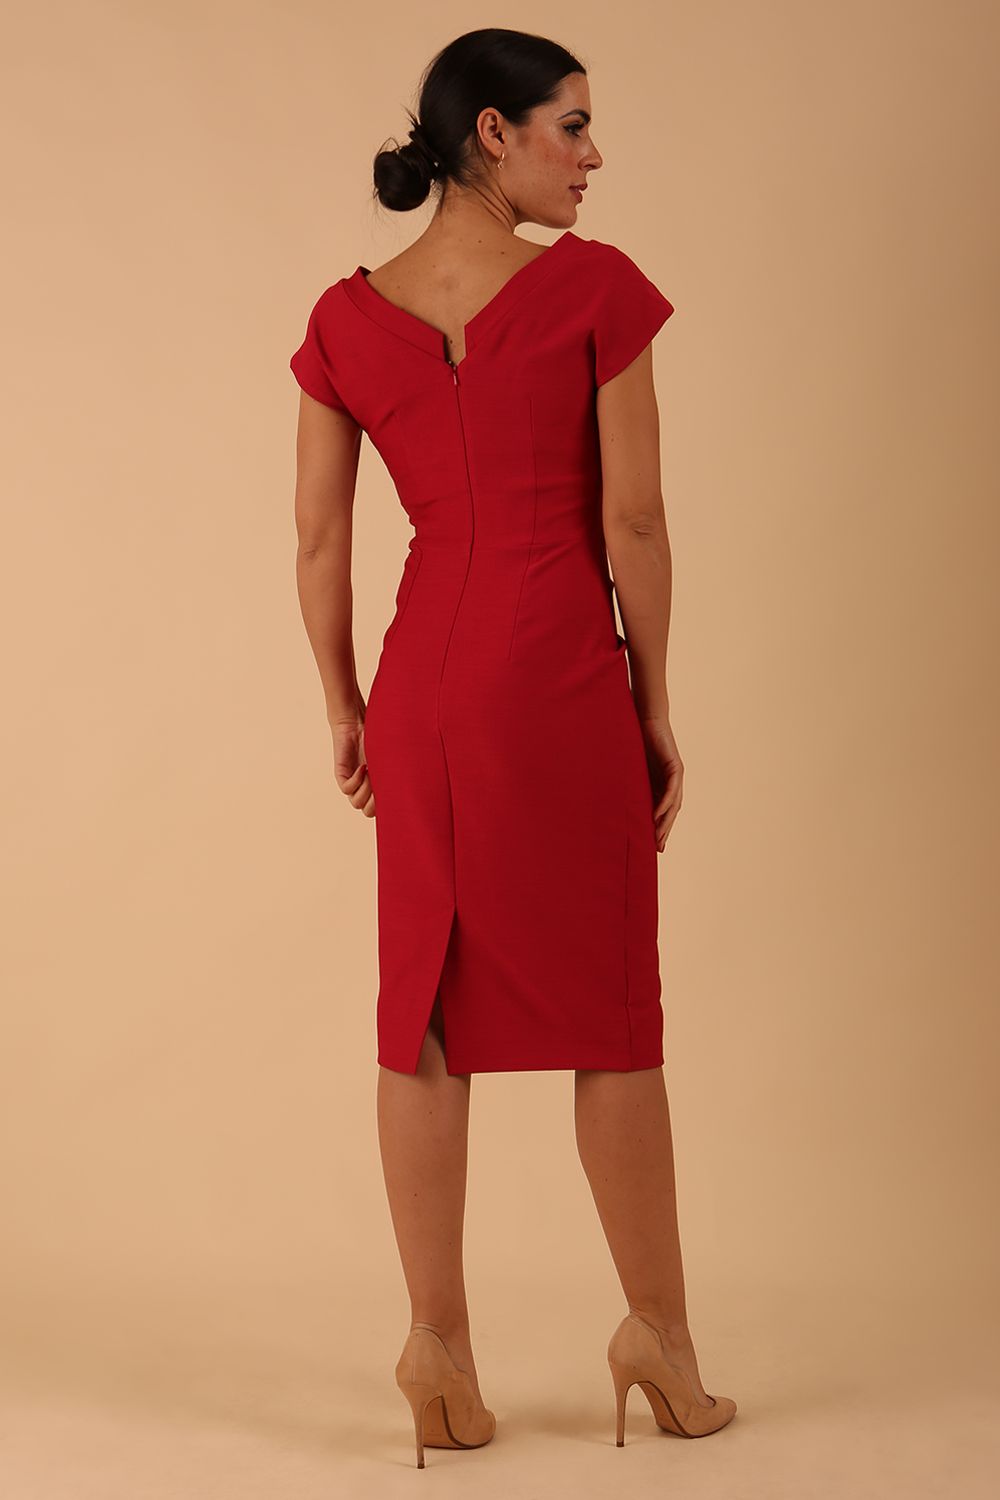 model wearing diva catwalk Seed Leela Rounded Neckline Cap Sleeved Dress in crimson pink colour